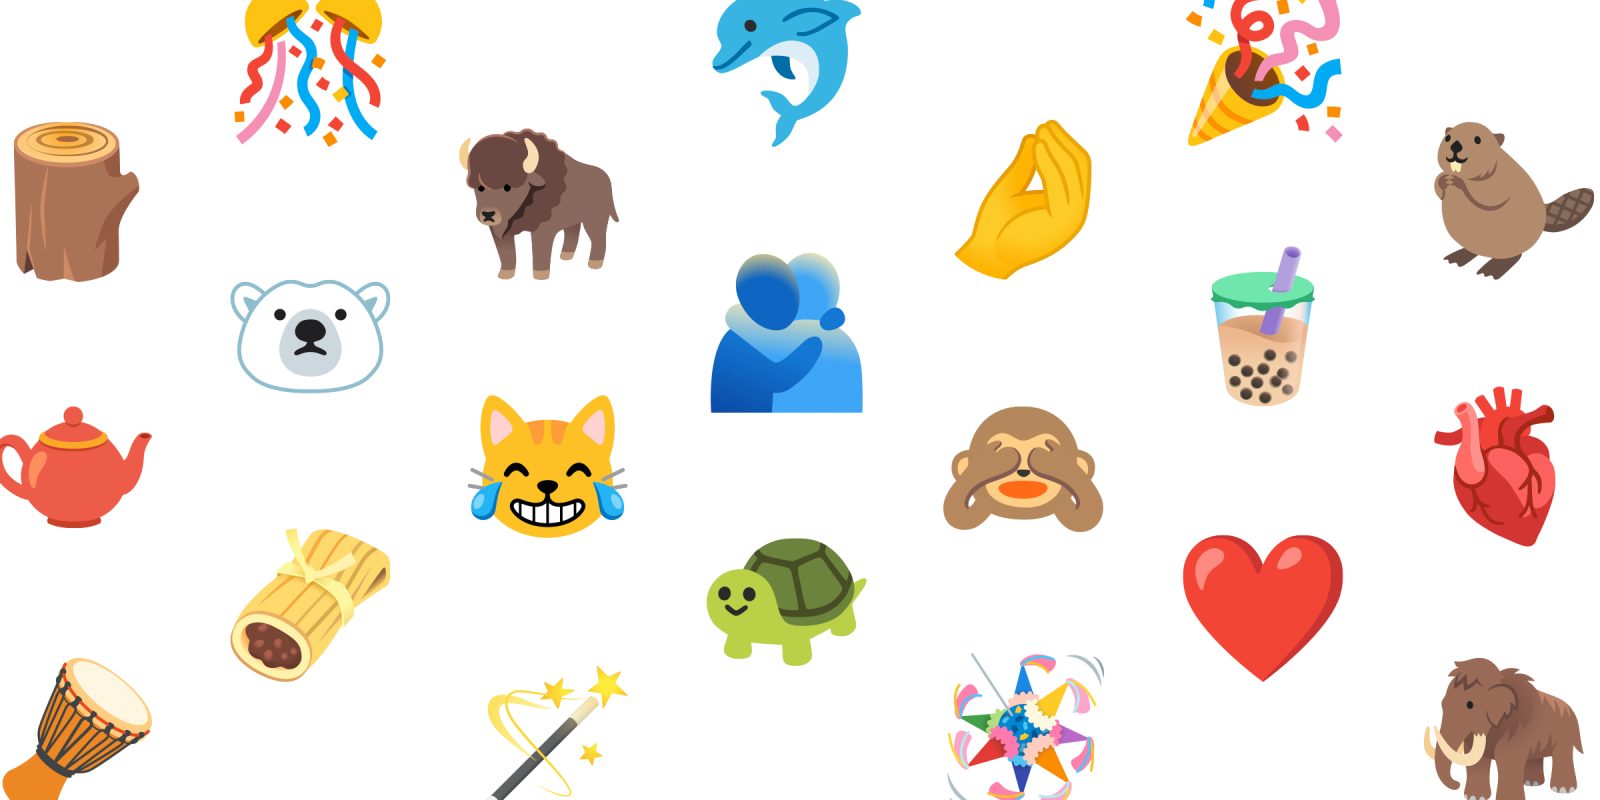 final Android 11 emoji